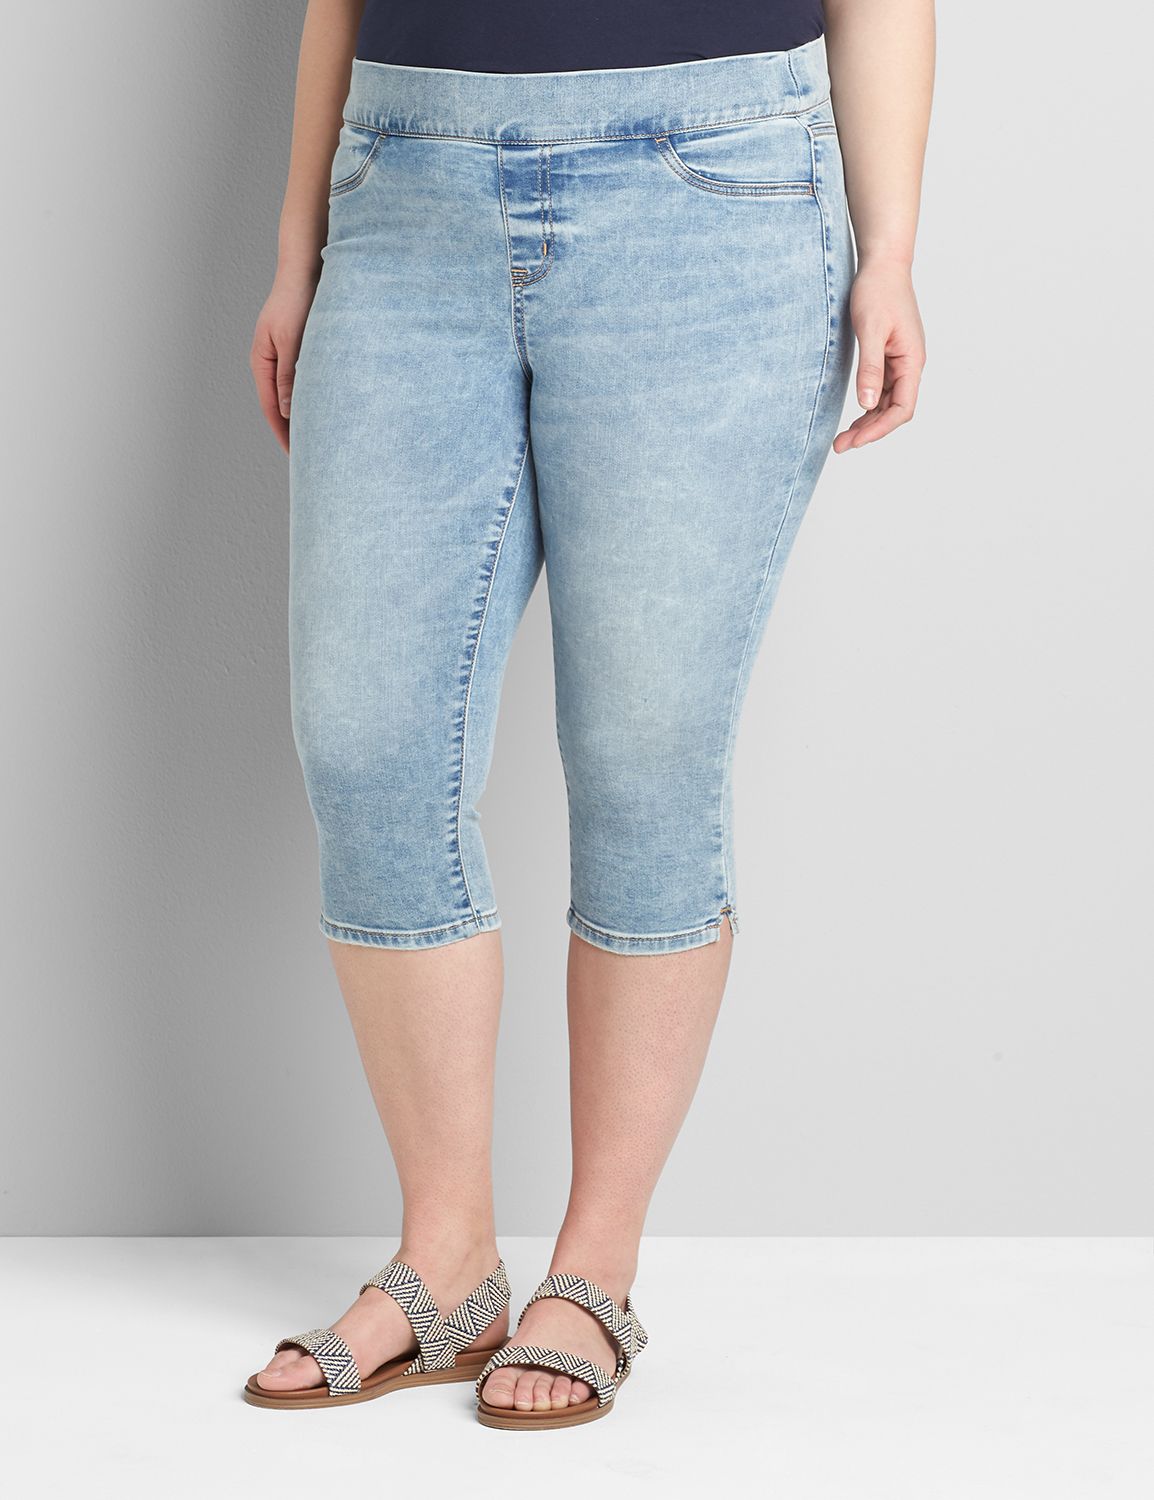 Plus Size Women's Capris & Crop Pants | Lane